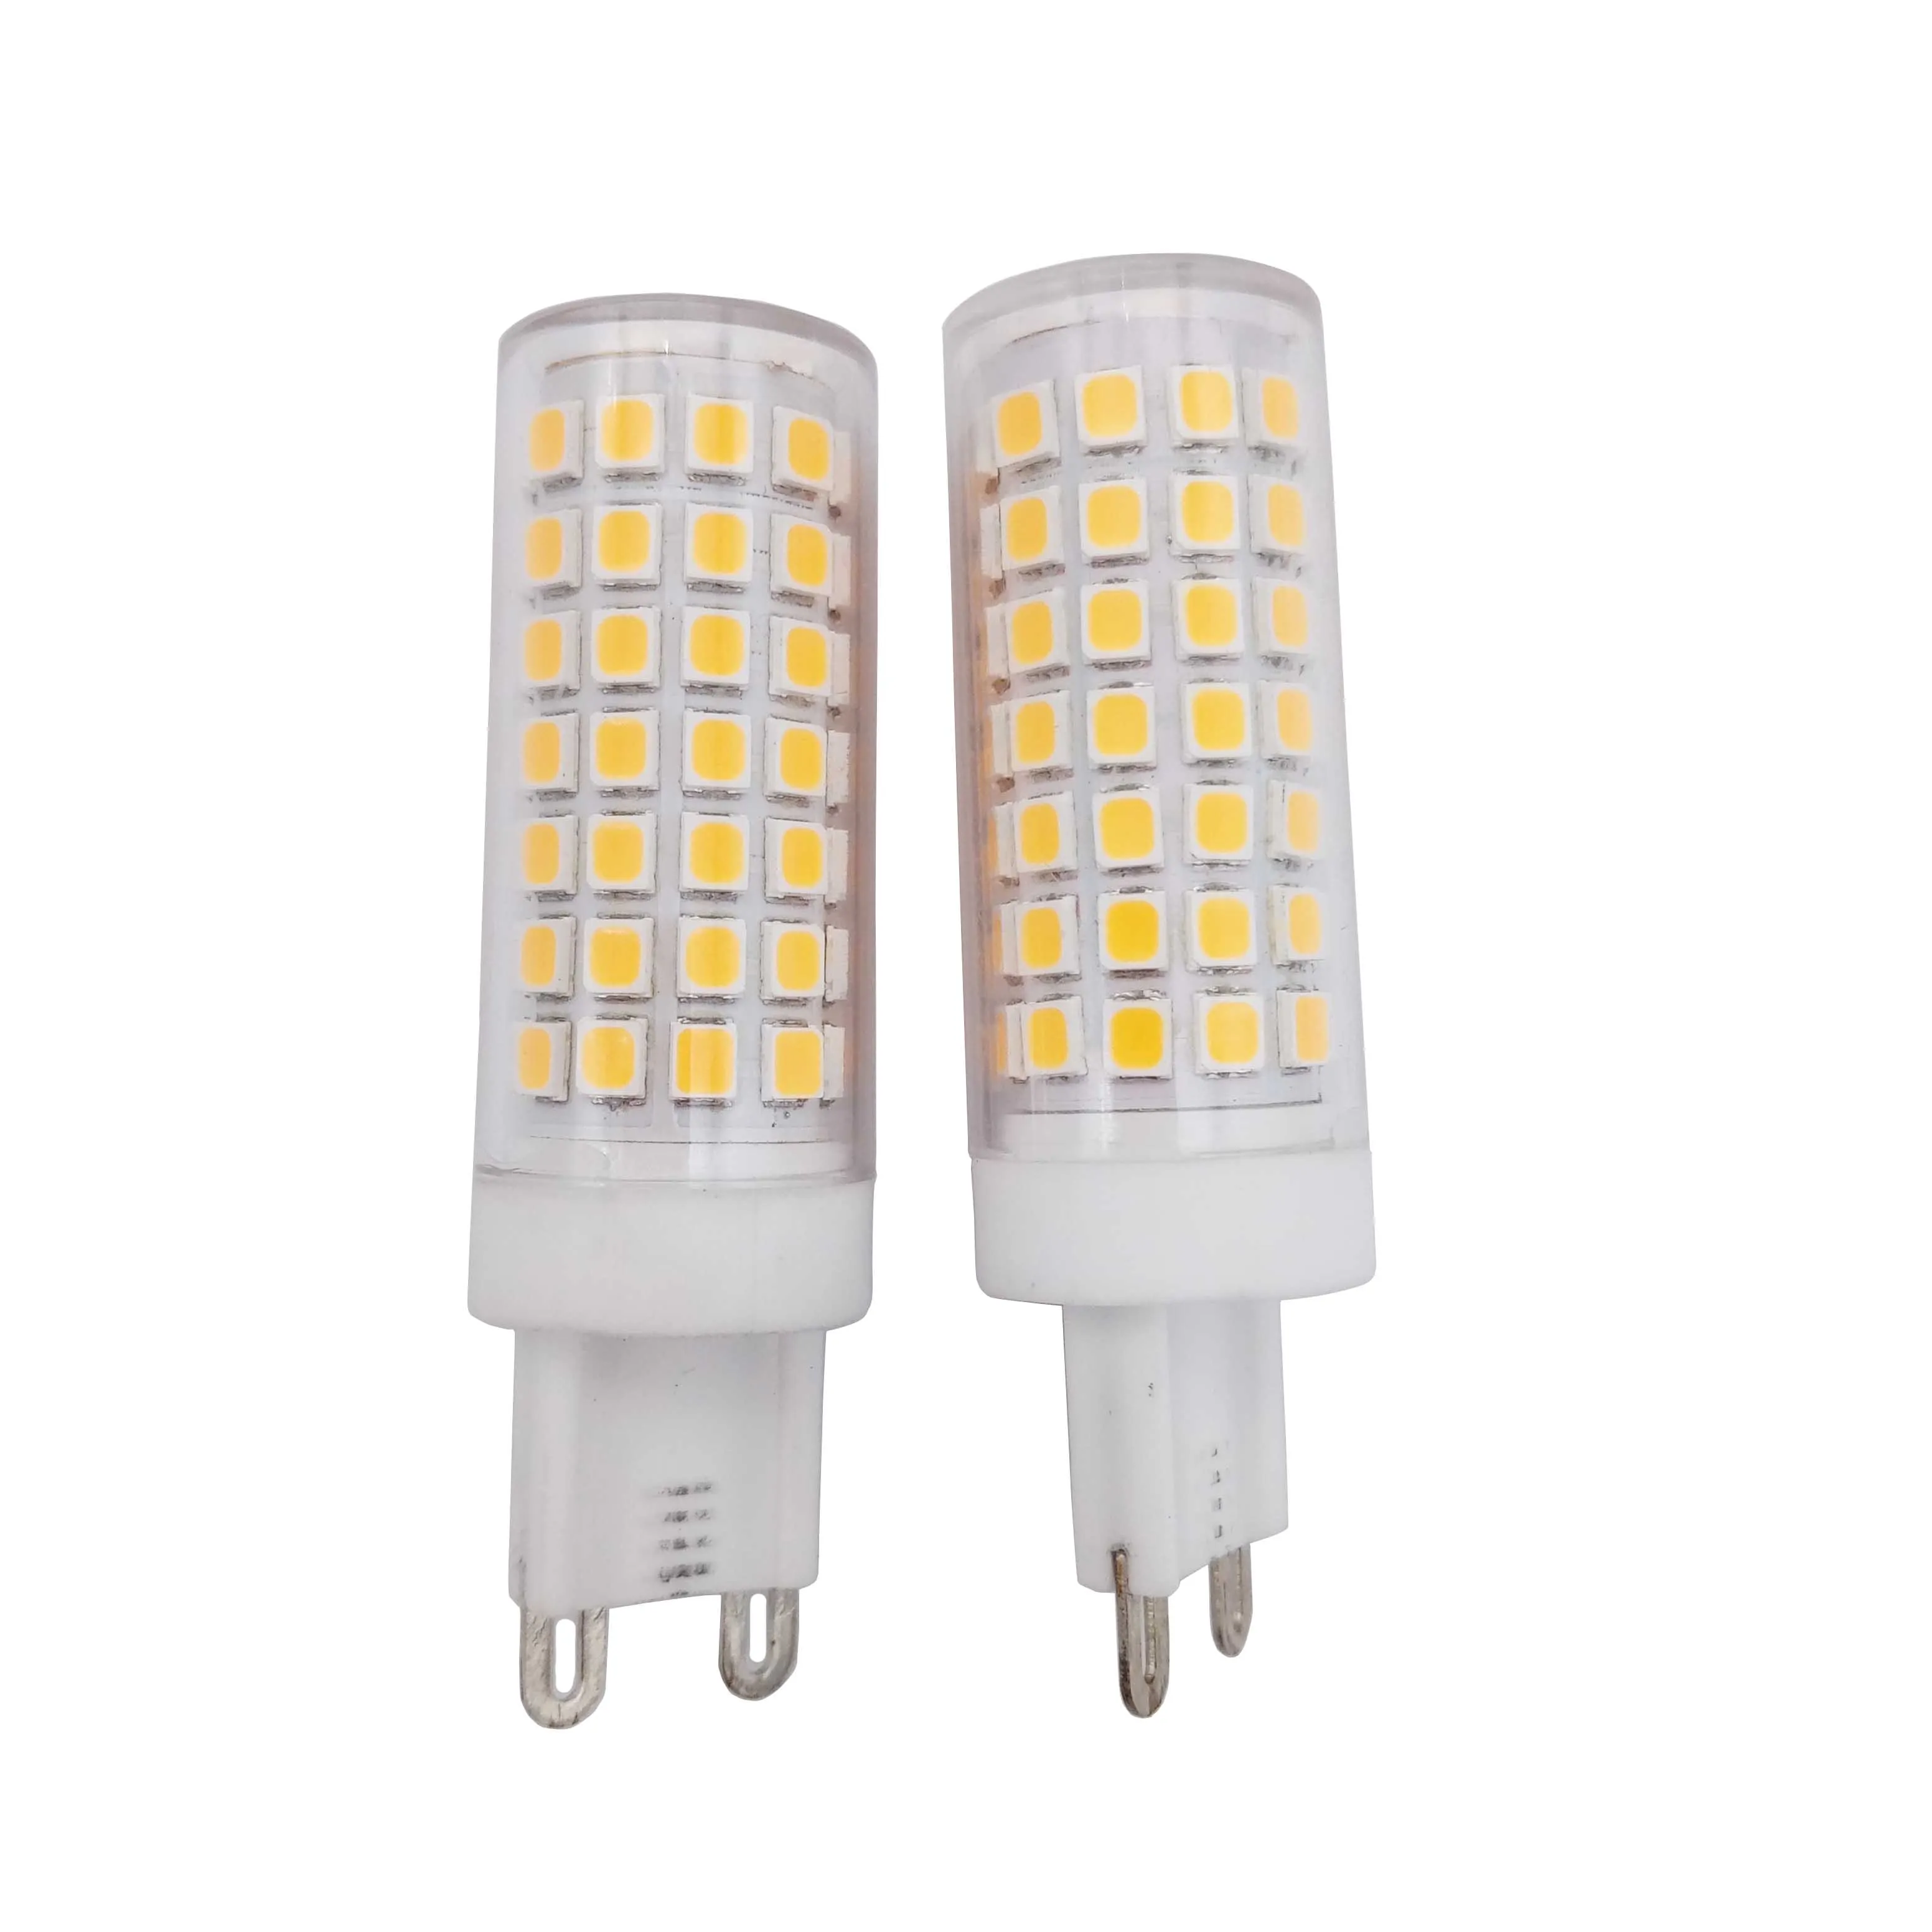 G9 Led Dimmable 230v Lamp 24v 110v 2700k - Buy G9 Led Bulbs,G9 Led Small Bulb Lamp,Lamp Parts Product on Alibaba.com